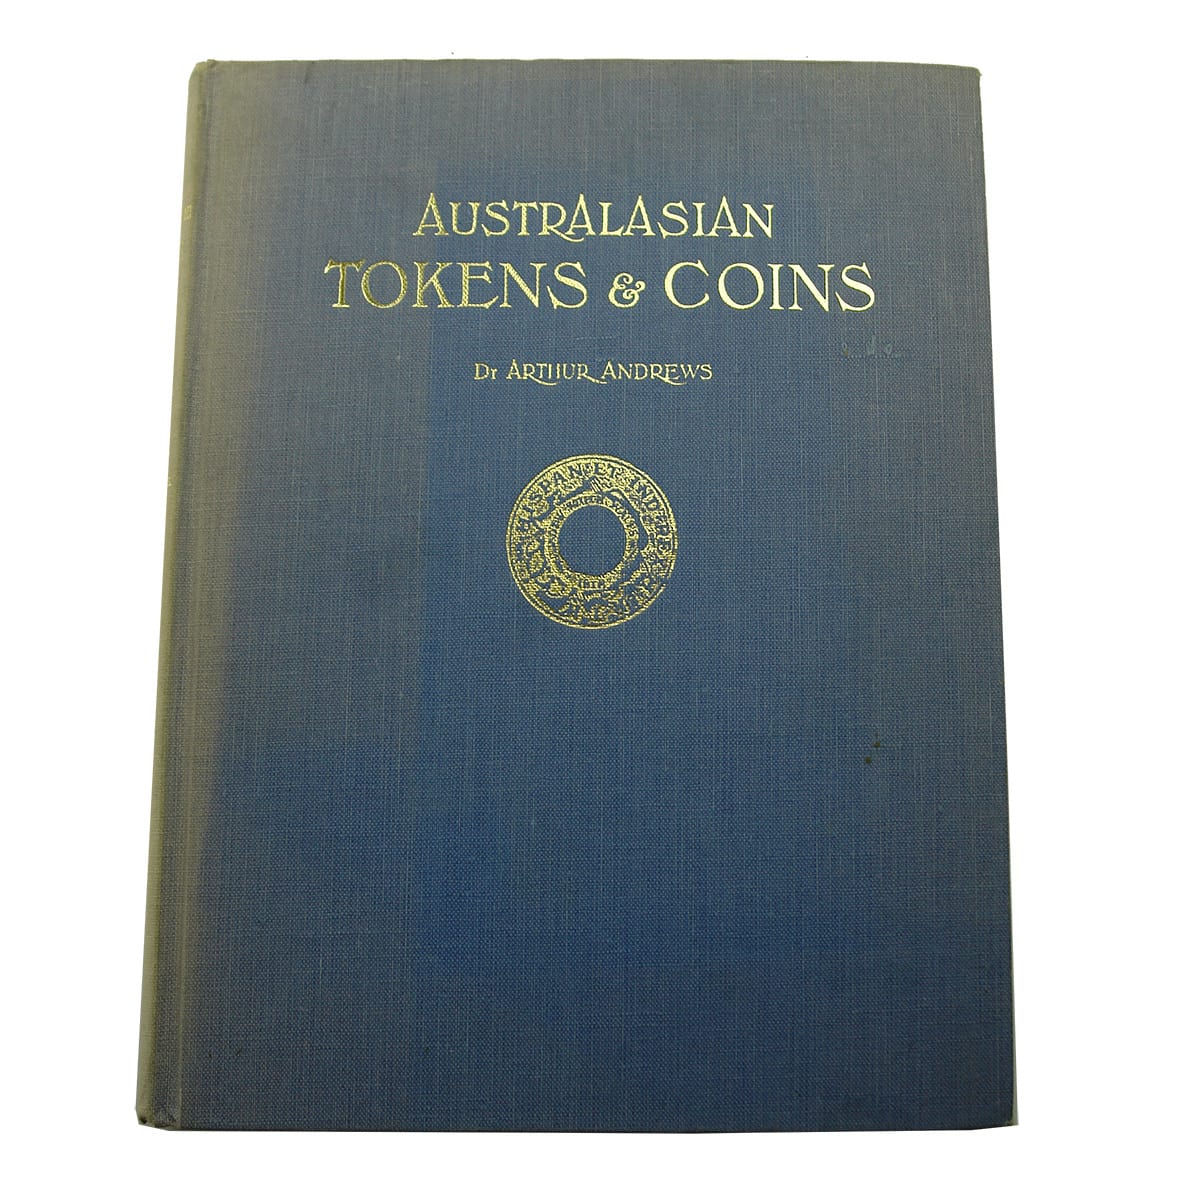 Book. Australasian Tokens & Coins, Dr Arthur Andrews, 1965 reprint.